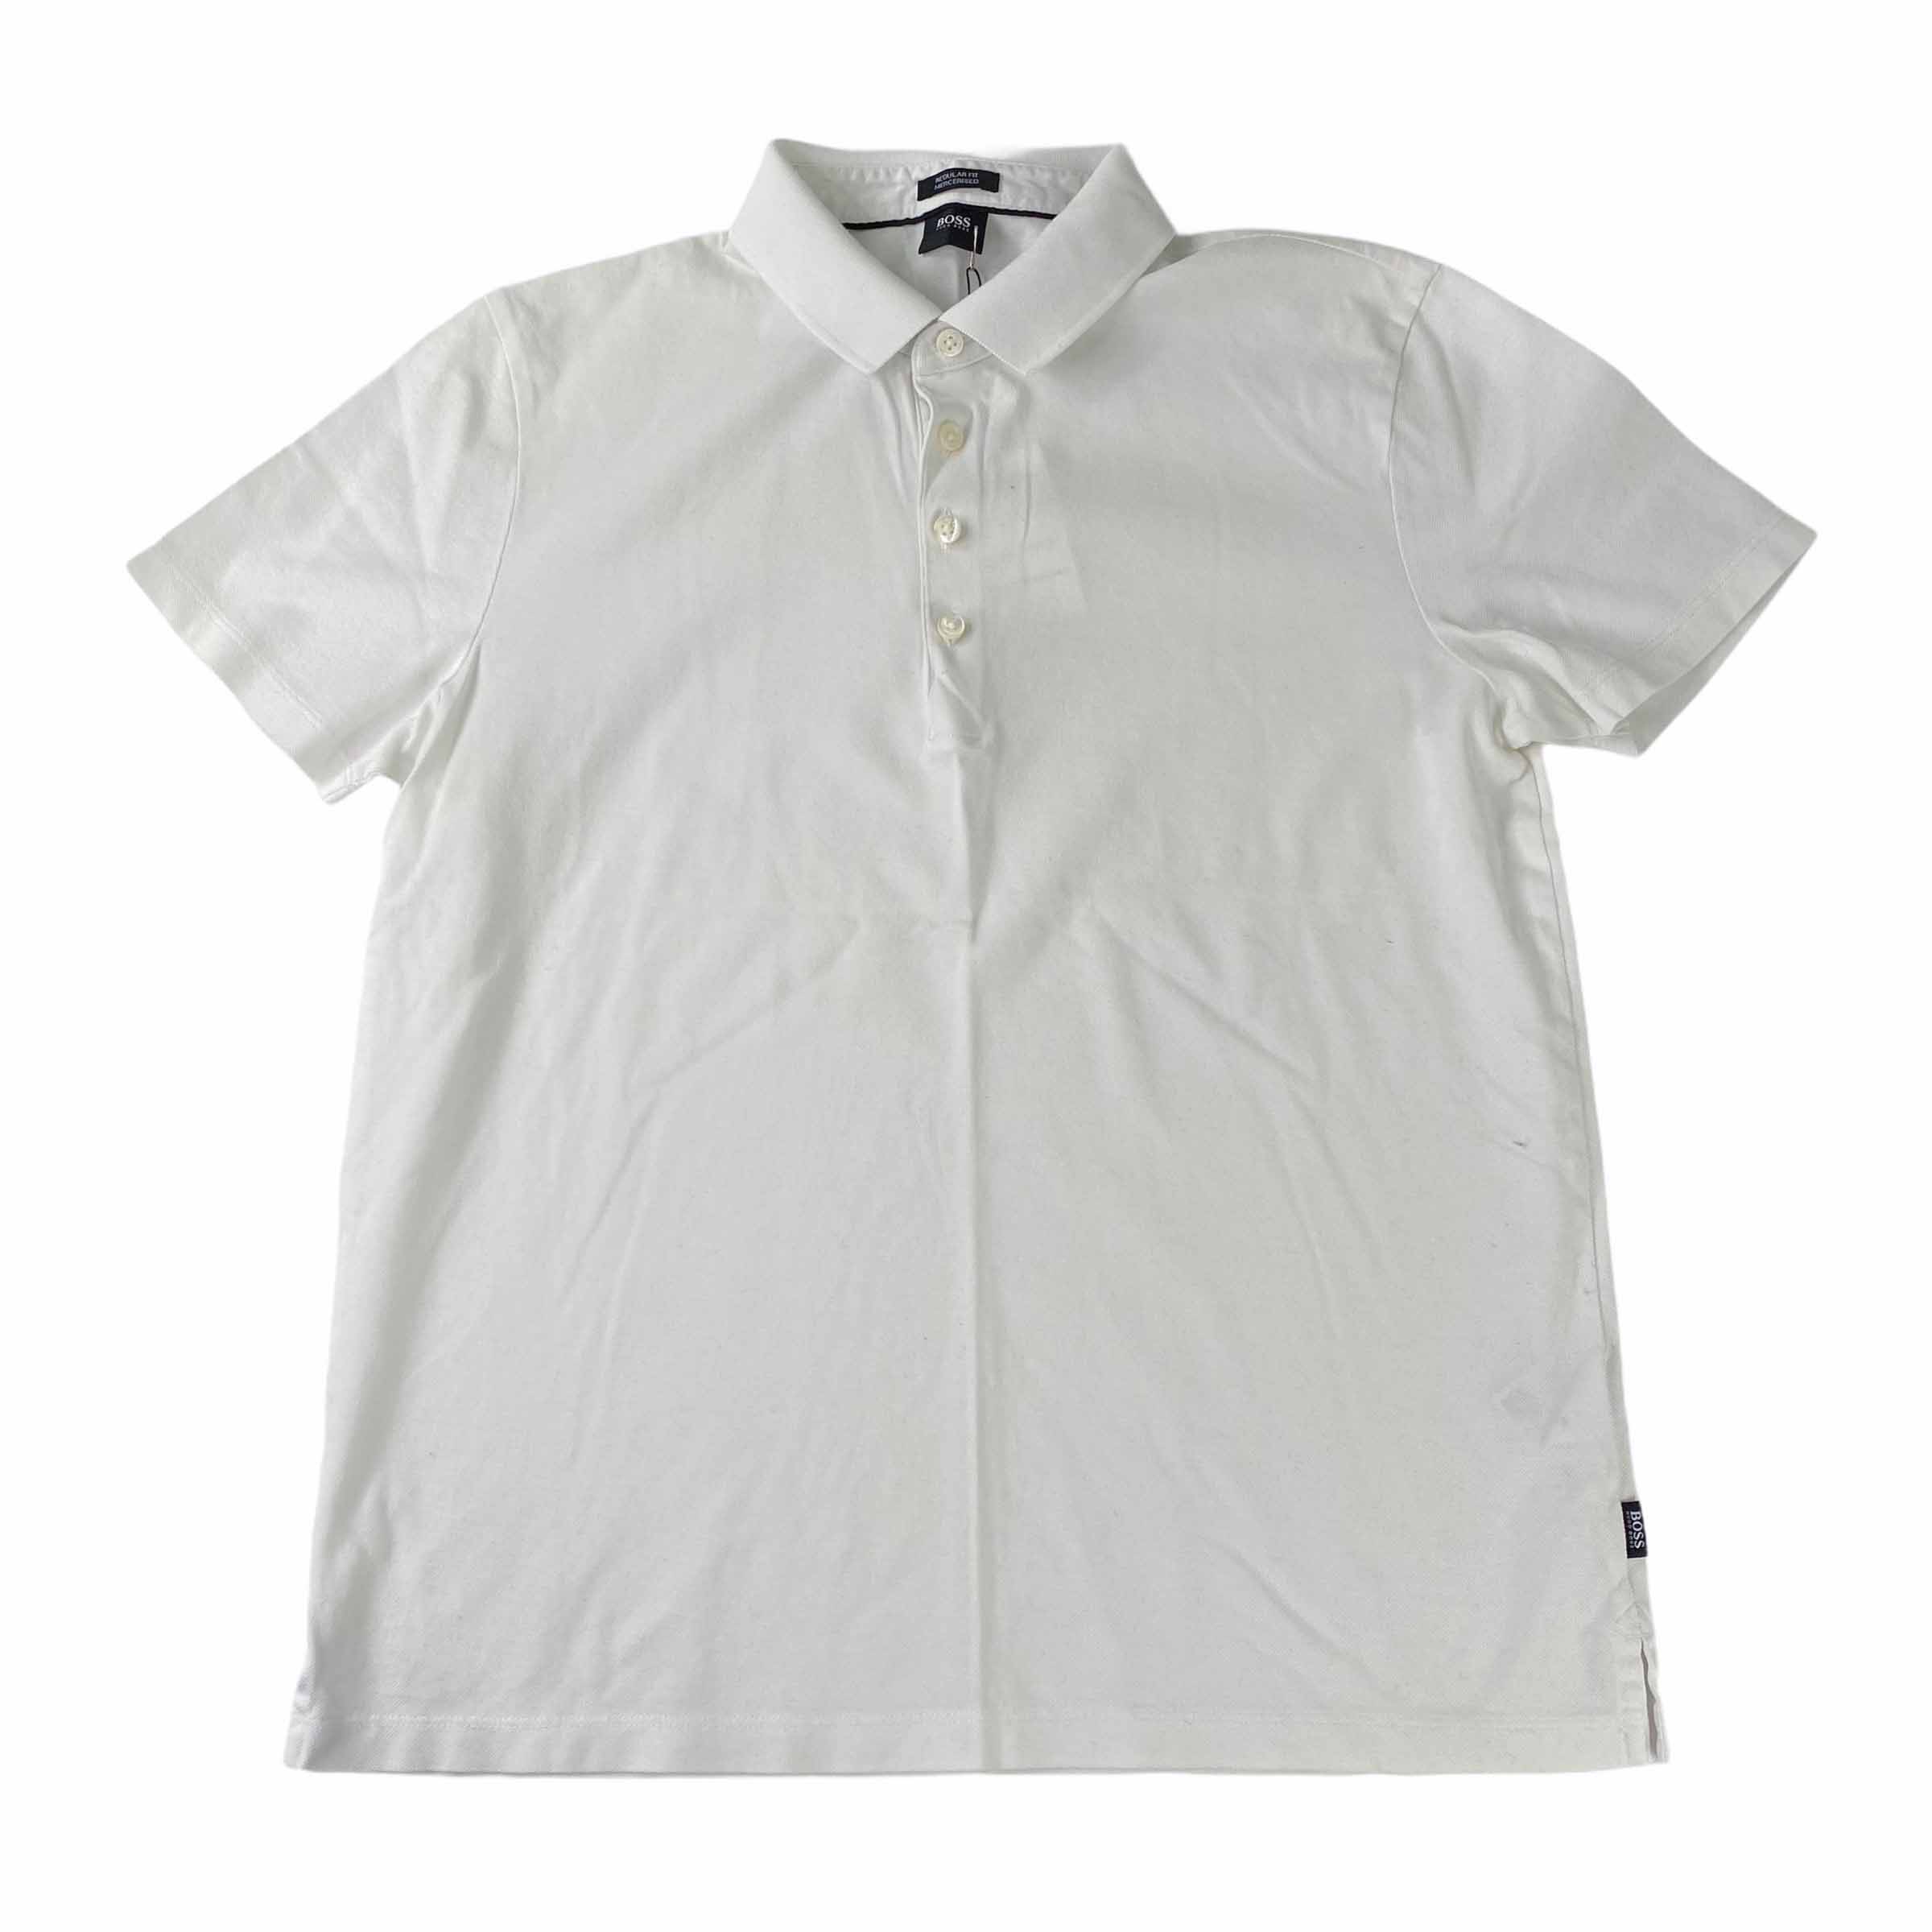 [Boss] White Polo Shirt - Size M